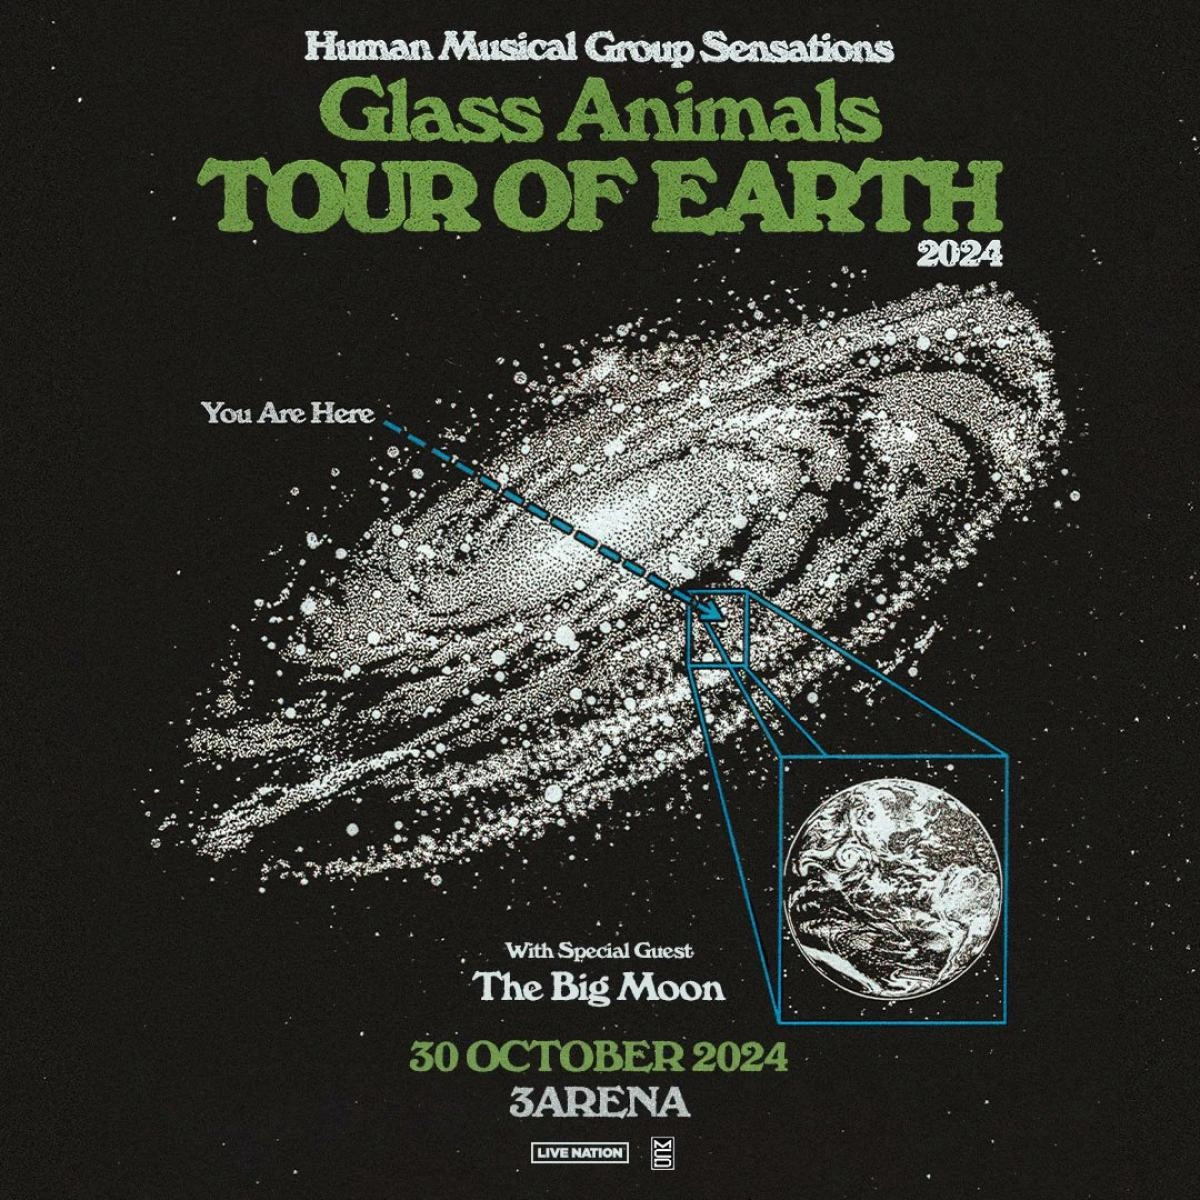 Billets Glass Animals (3Arena Dublin - Dublin)